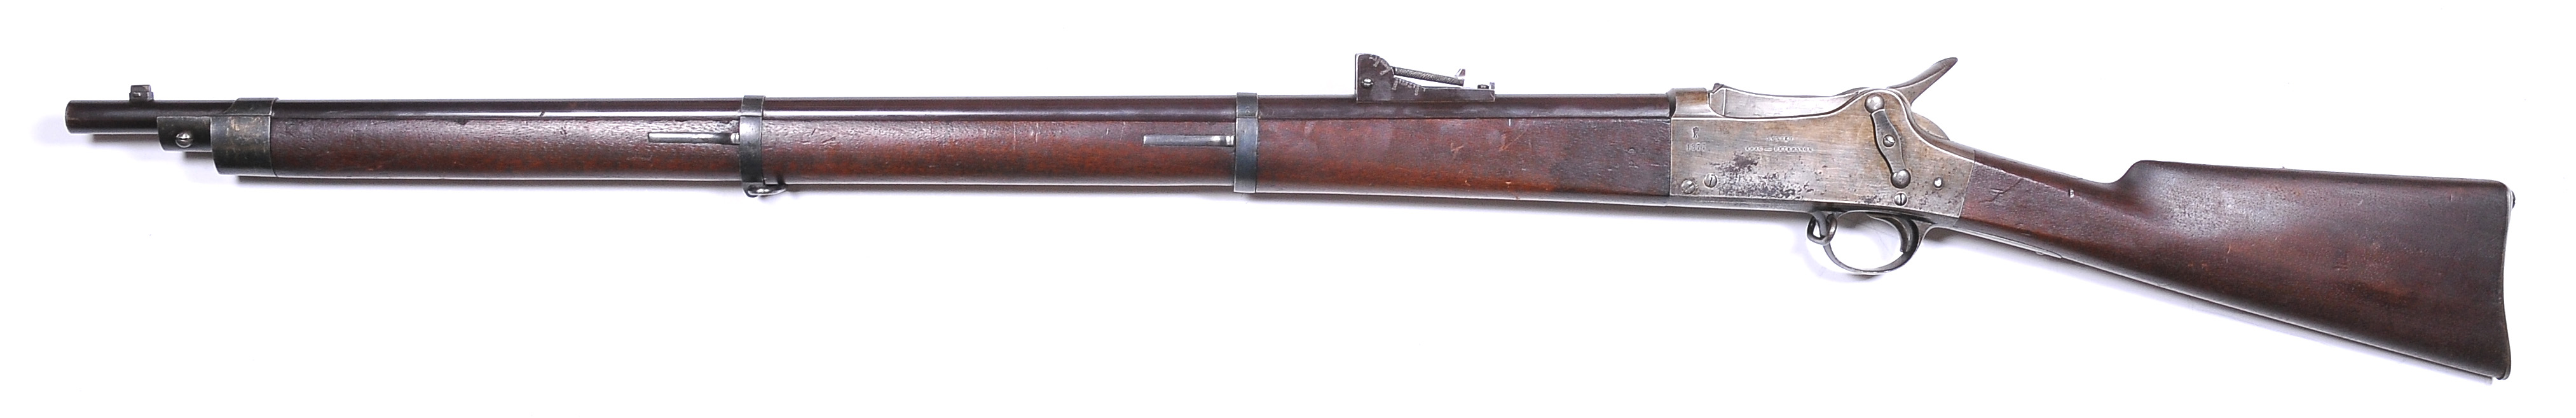 ./guns/rifle/bilder/Rifle-Kongsberg-Krag-Petersson-M1876-2-2.jpg